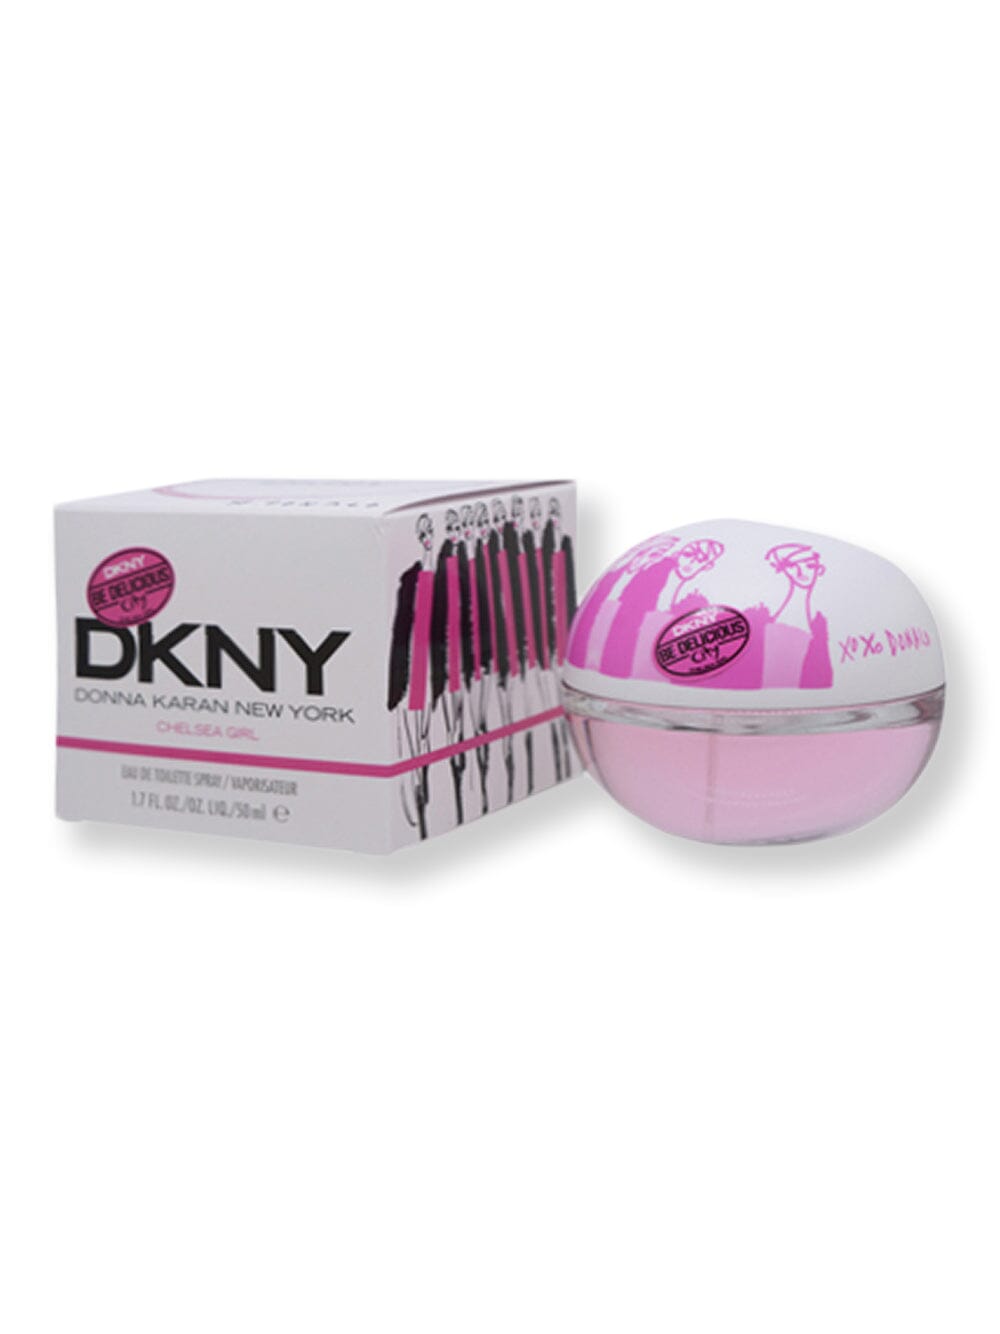 Donna Karan Donna Karan Be Delicious City Chelsea Girl EDT Spray 1.7 oz50 ml Perfume 